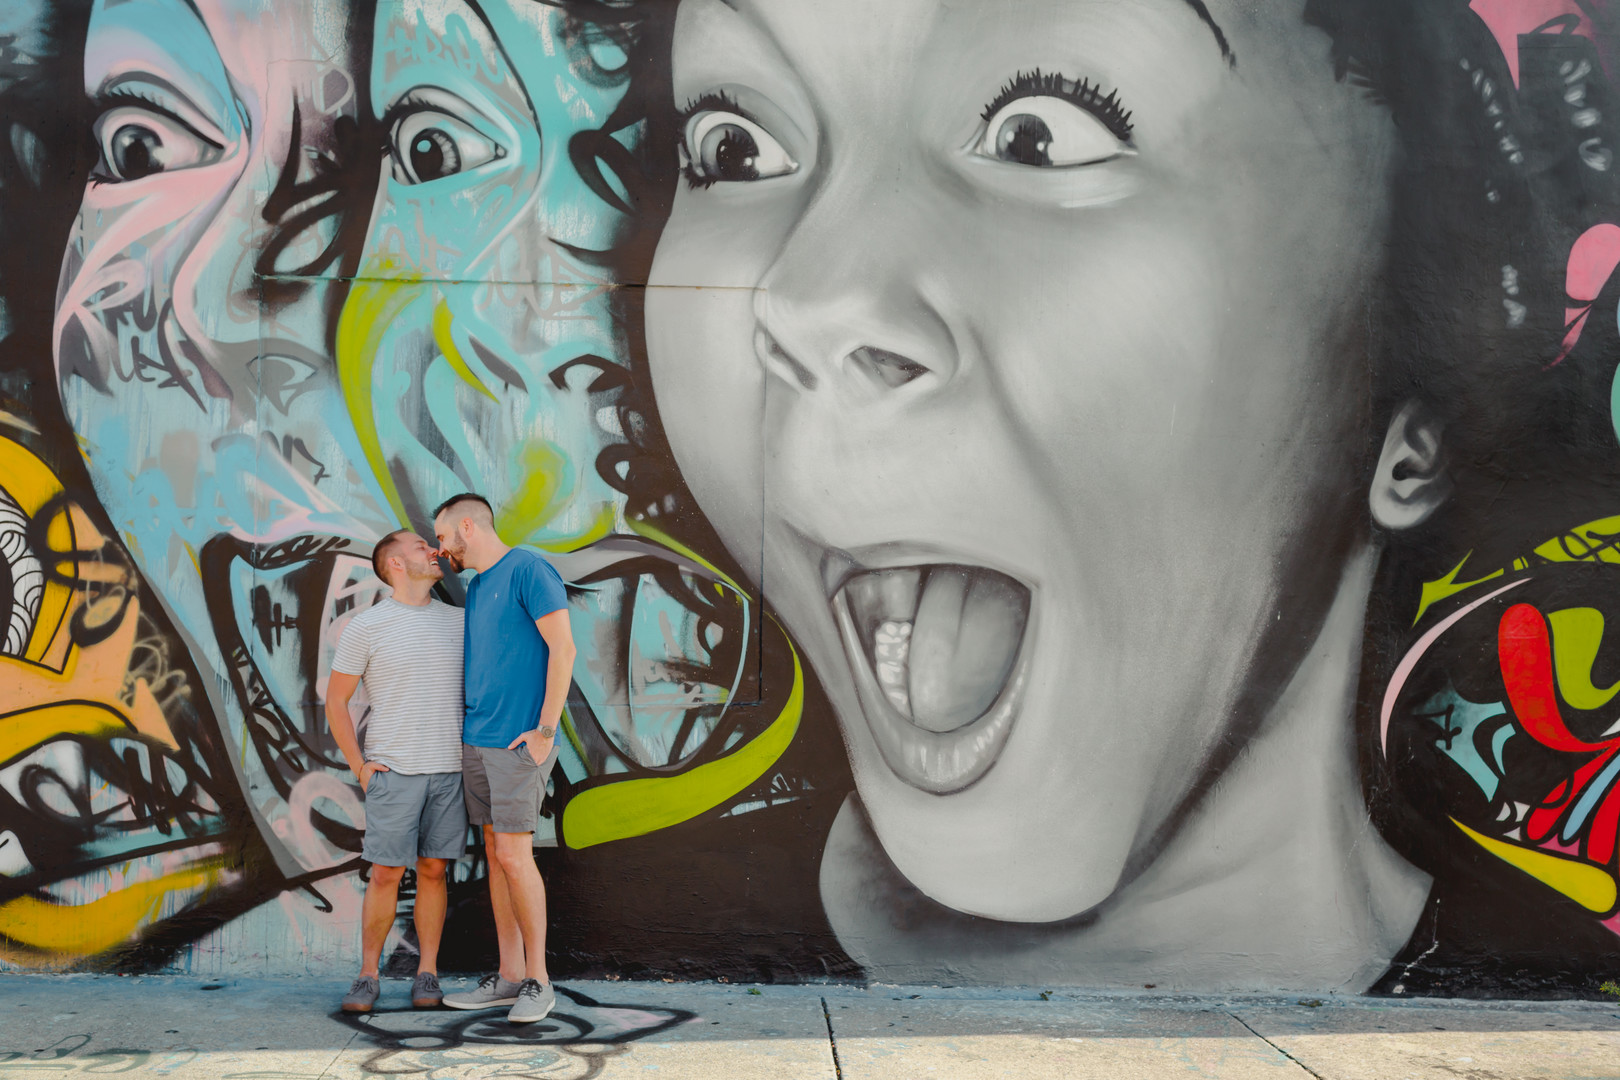 Fun, colorful arcade engagement photos two grooms street art Miami, Florida art district graffiti casual